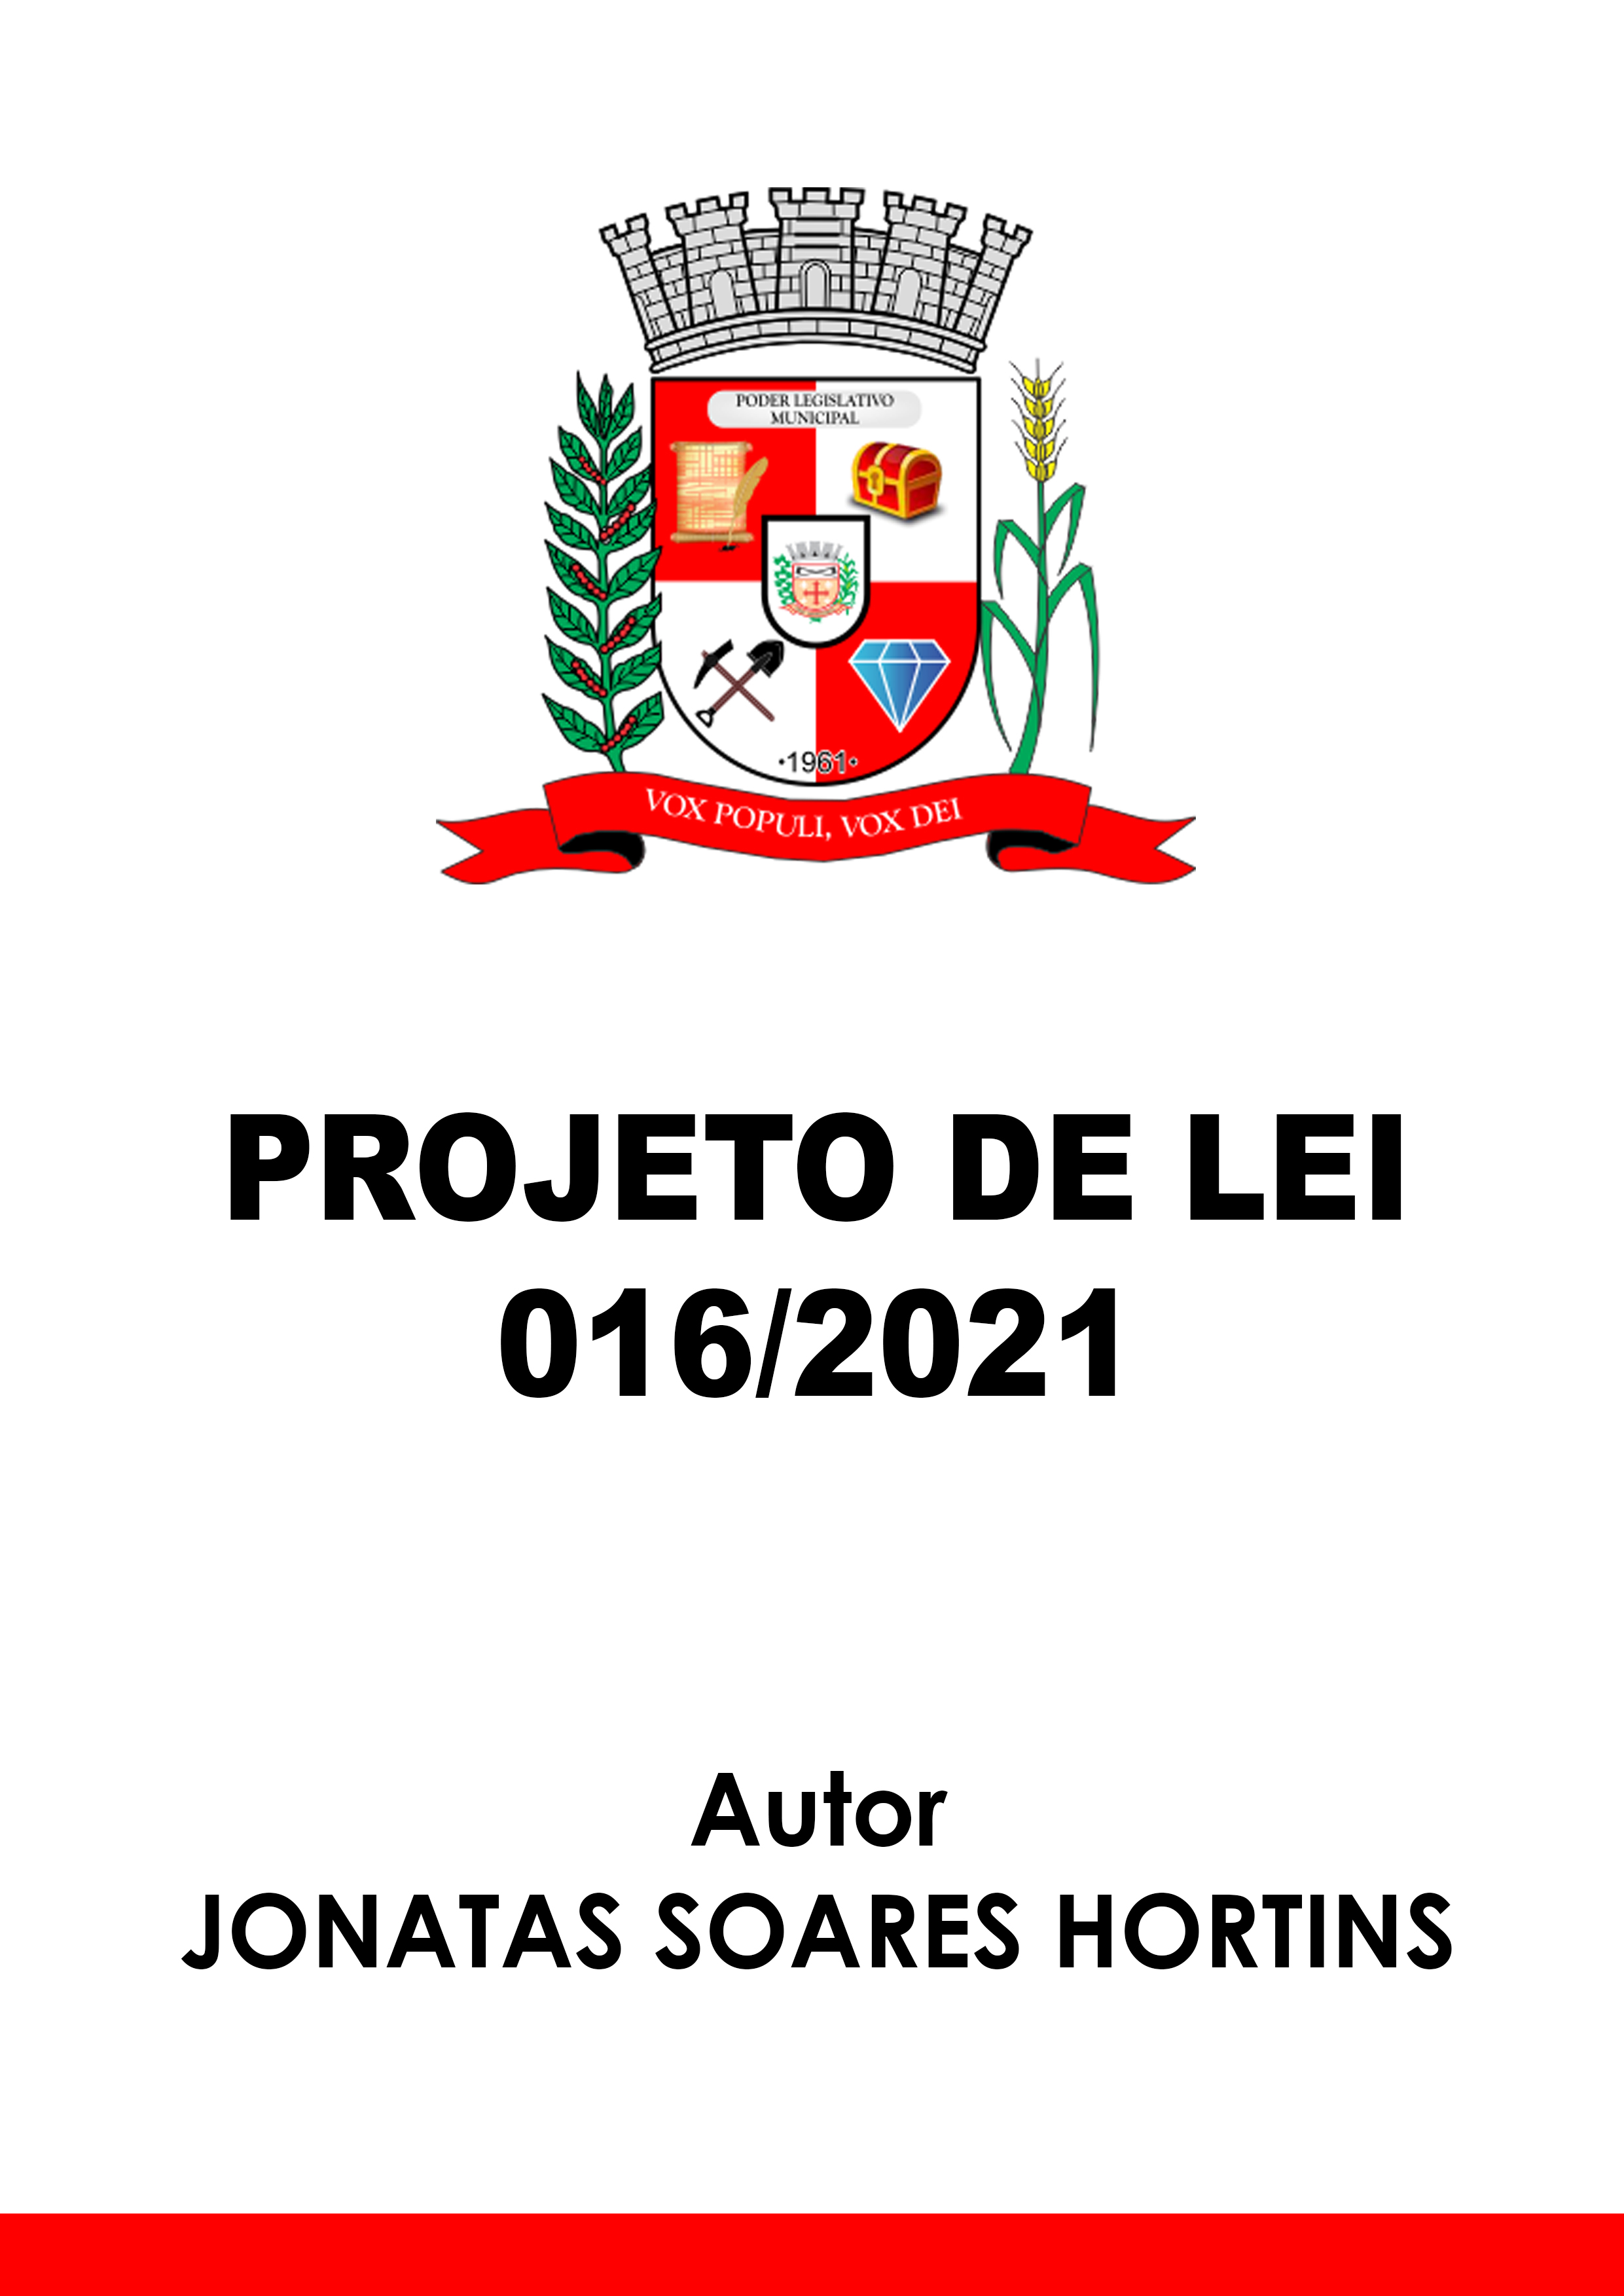 Projeto de Lei 016/2021 - Autor: Jonatas Soares Hortins